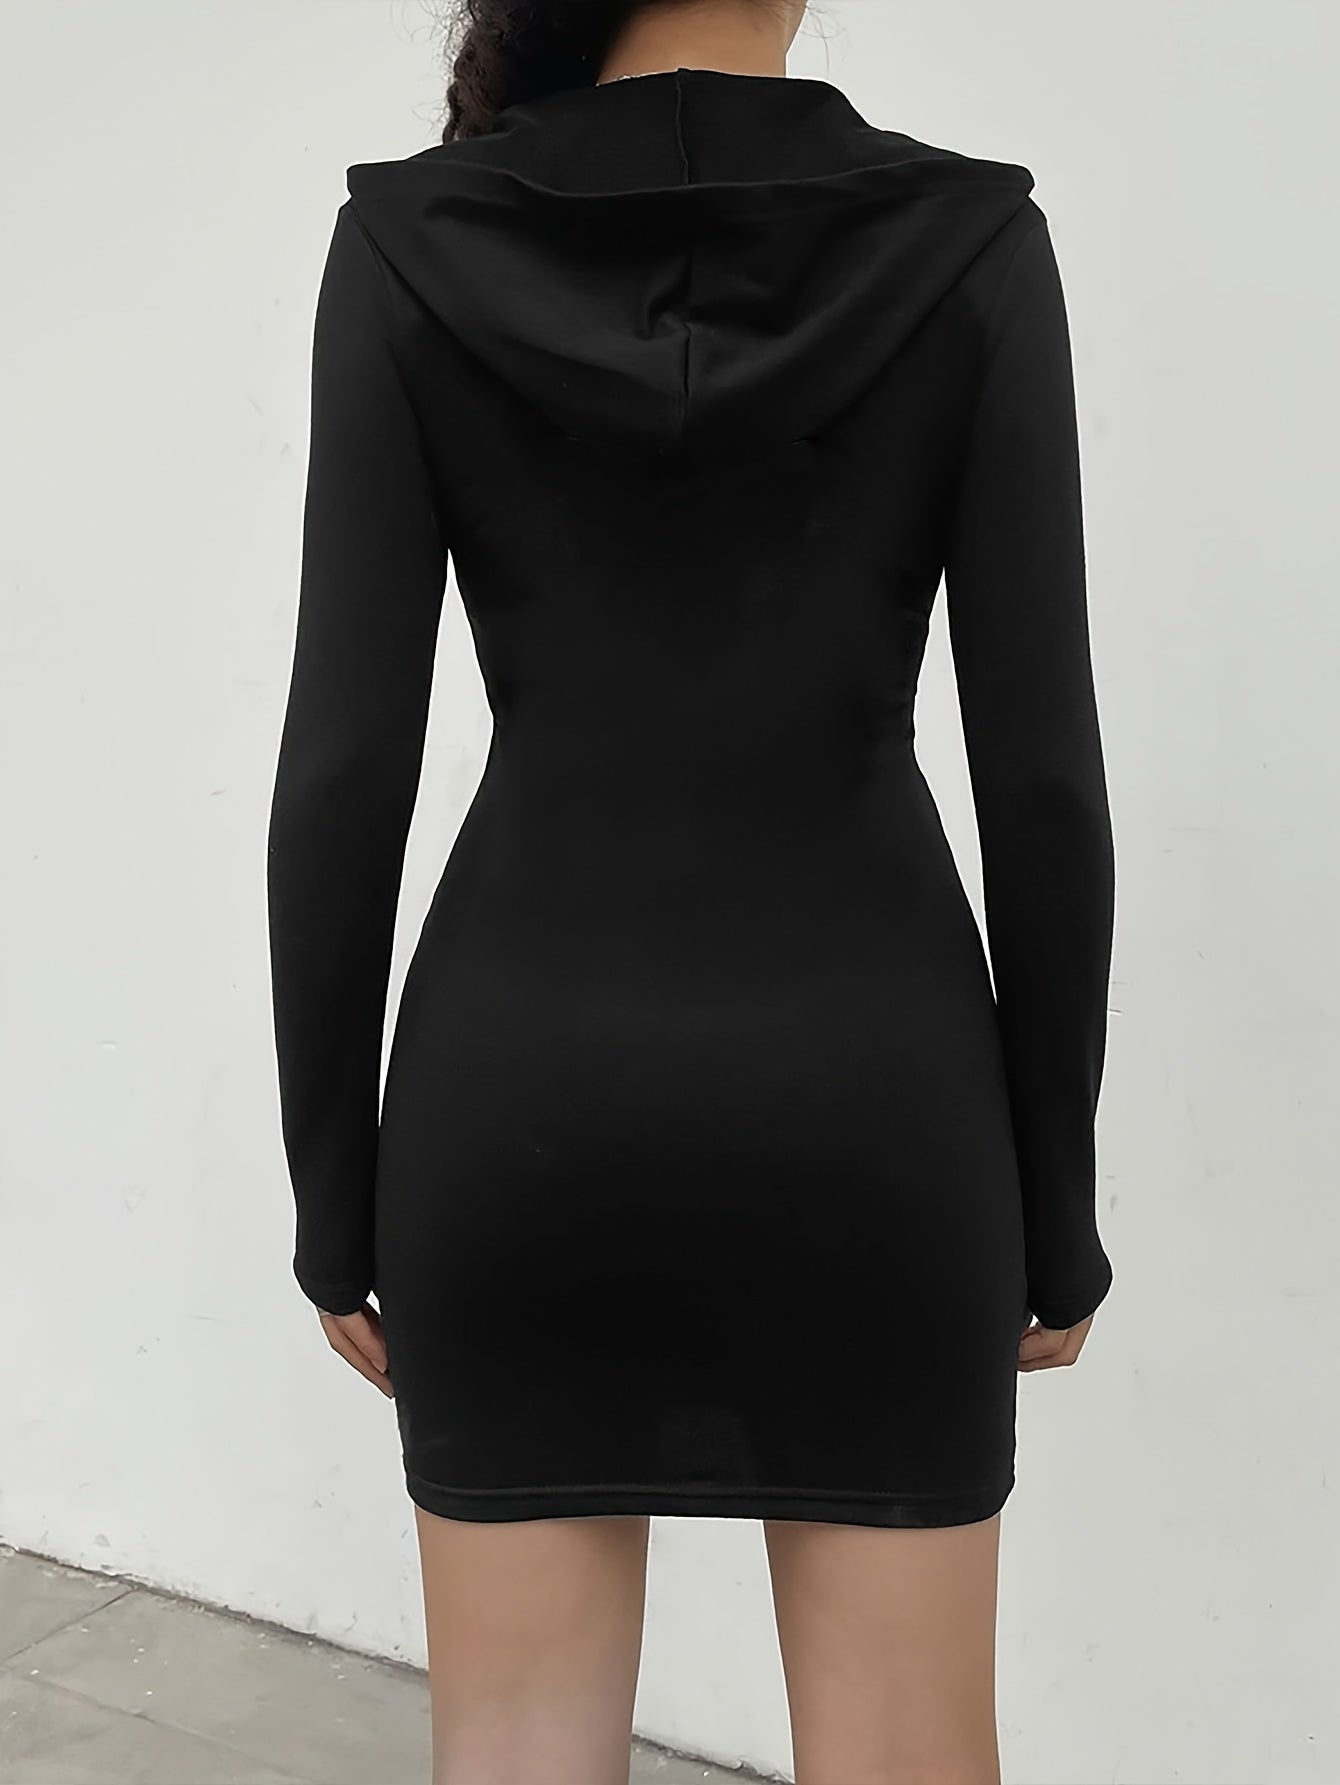 Antmvs Wing Print Hooded Dress, Casual Zipper Long Sleeve Mini Dress, Women's Clothing